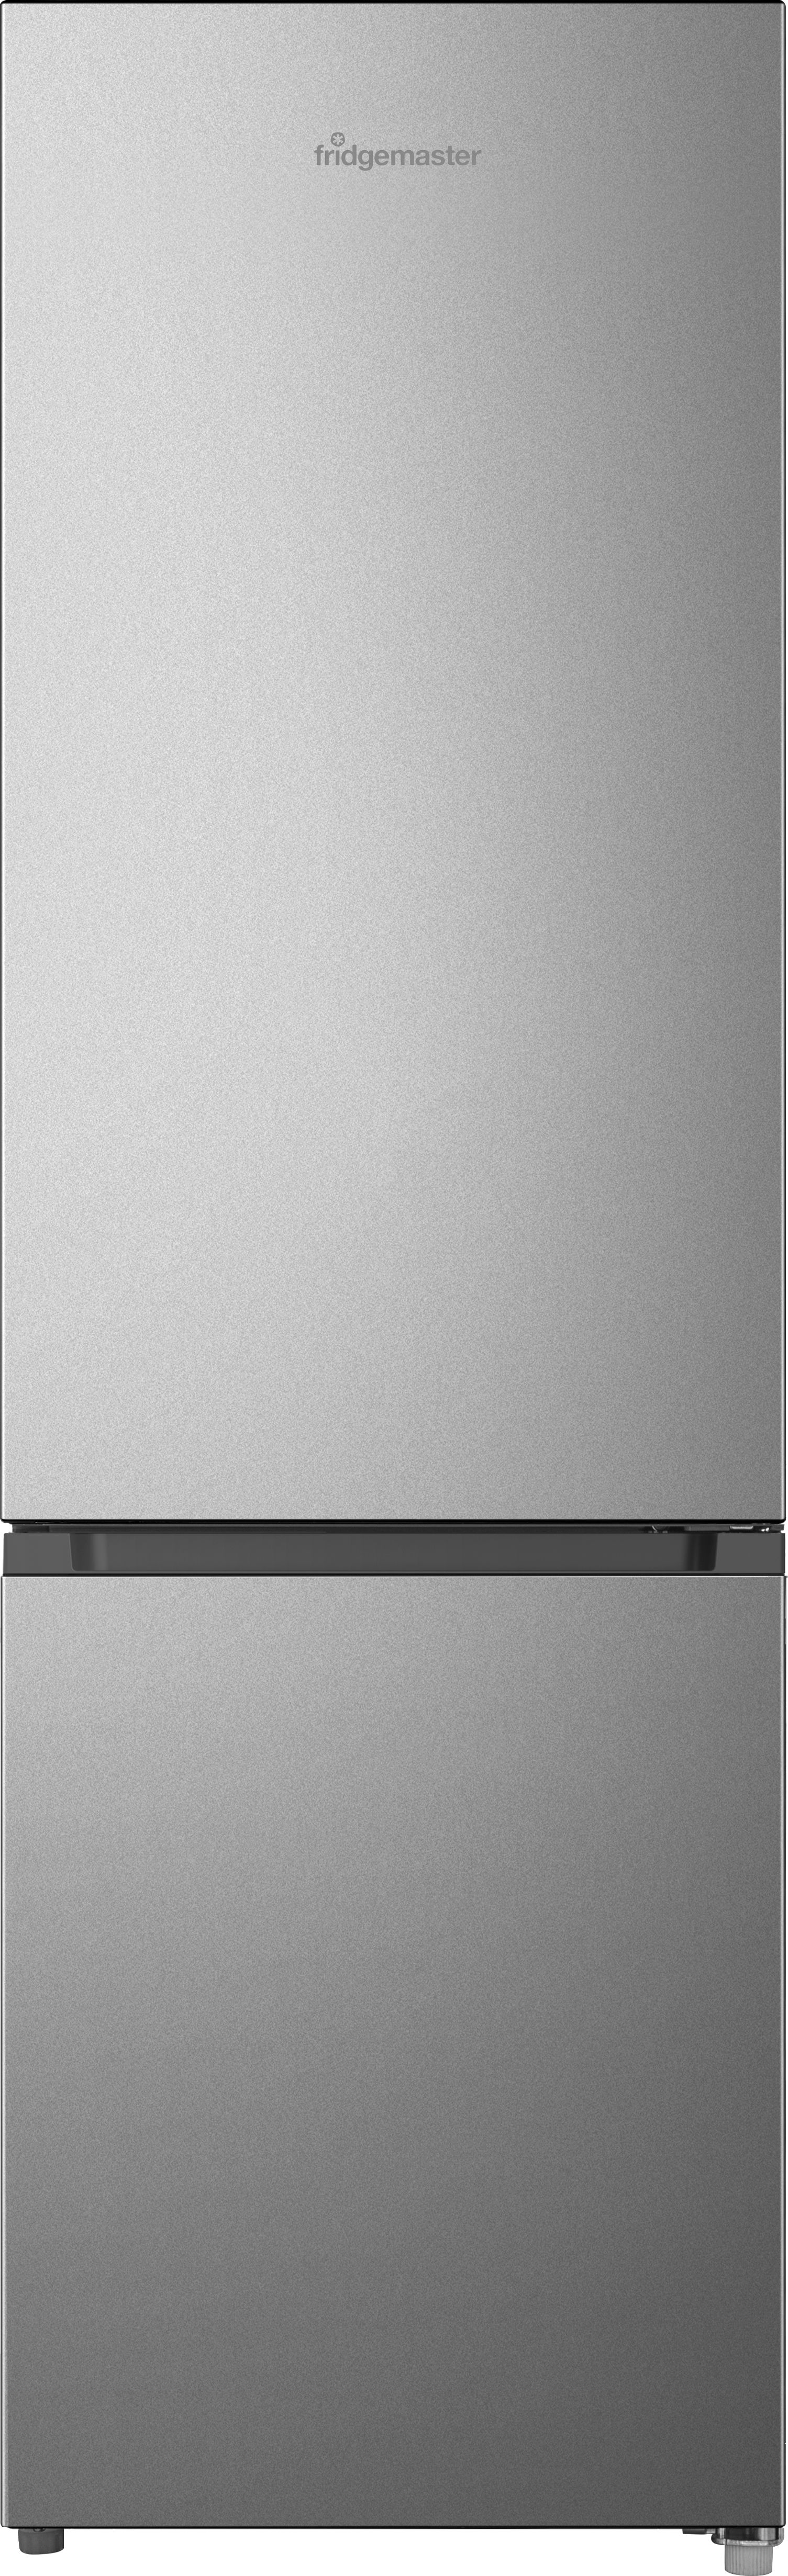 Fridgemaster MC55265ES 70/30 Fridge Freezer - Silver - E Rated, Silver